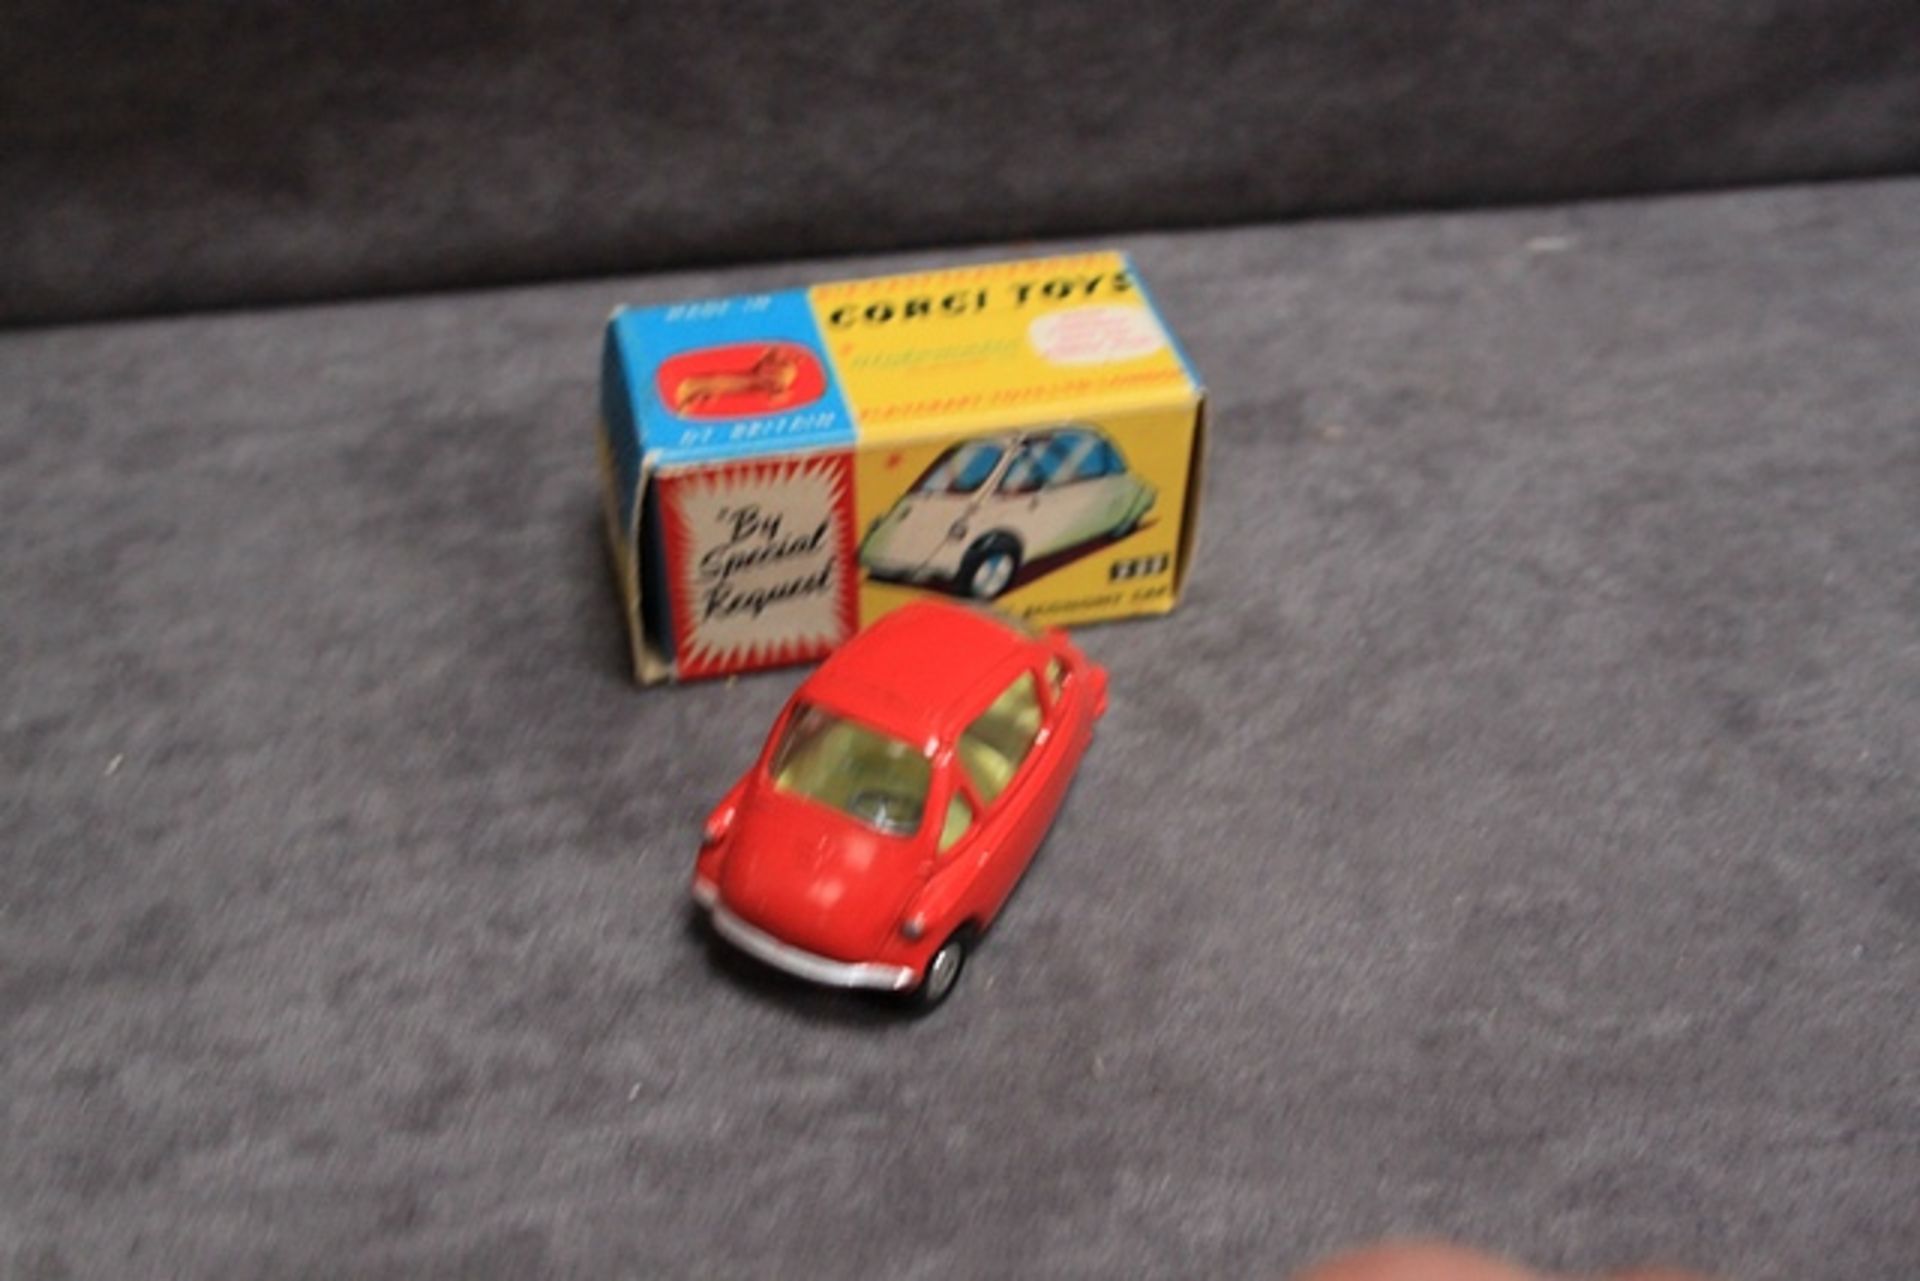 Mint Corgi Toys diecast #233 Heinkel in red excellent firm crisp box - Image 3 of 3